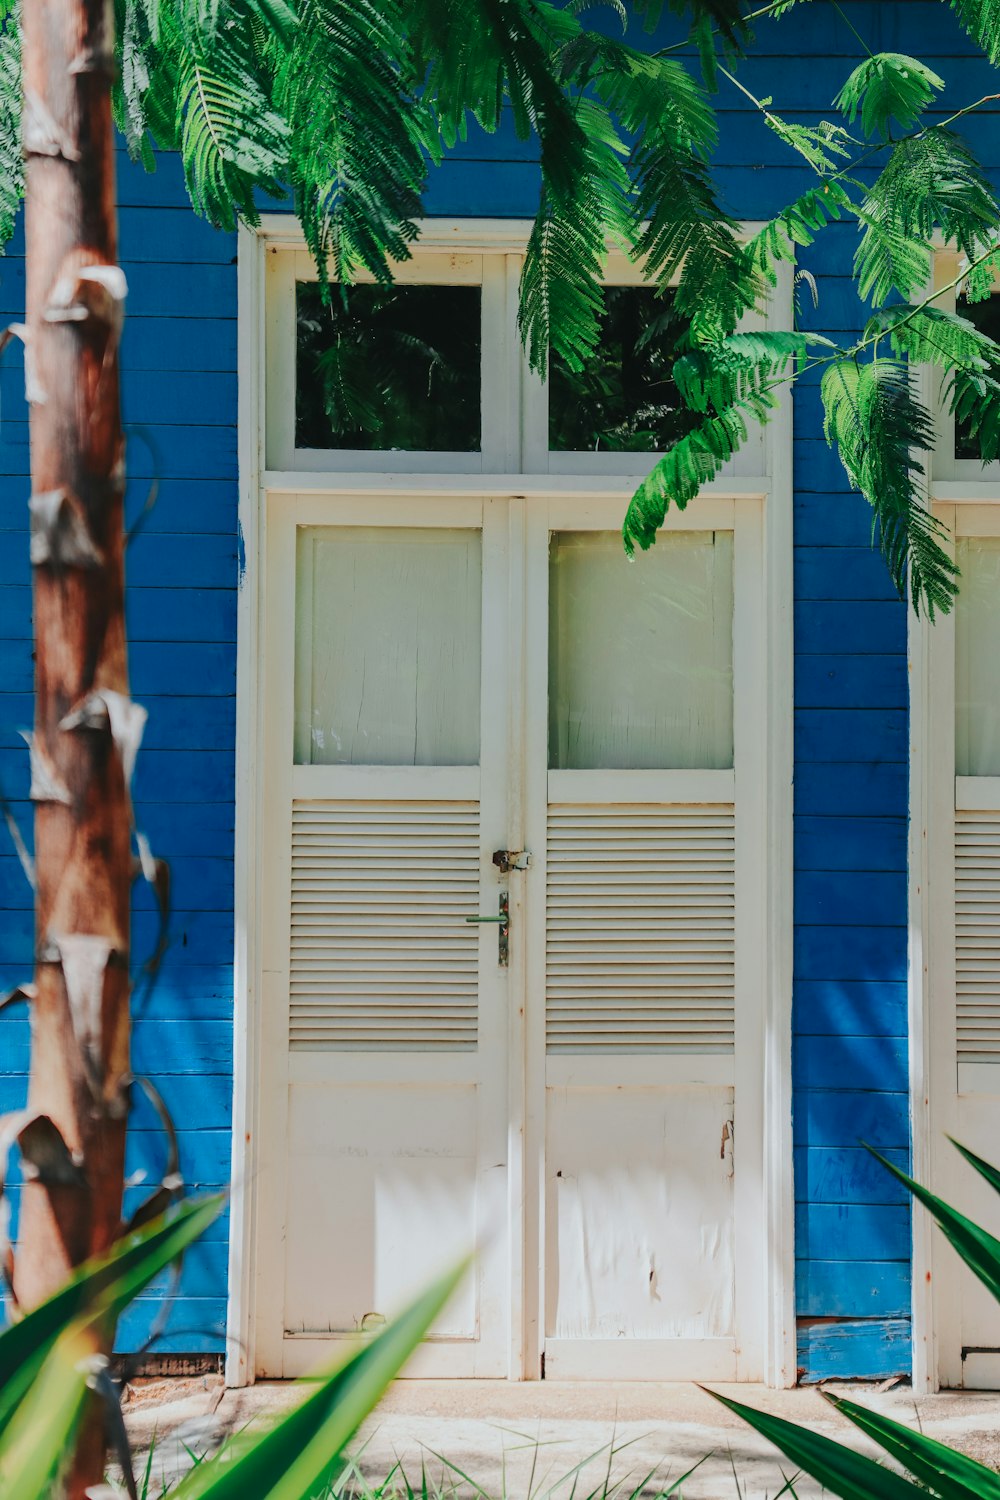 green palm tree beside blue wooden door